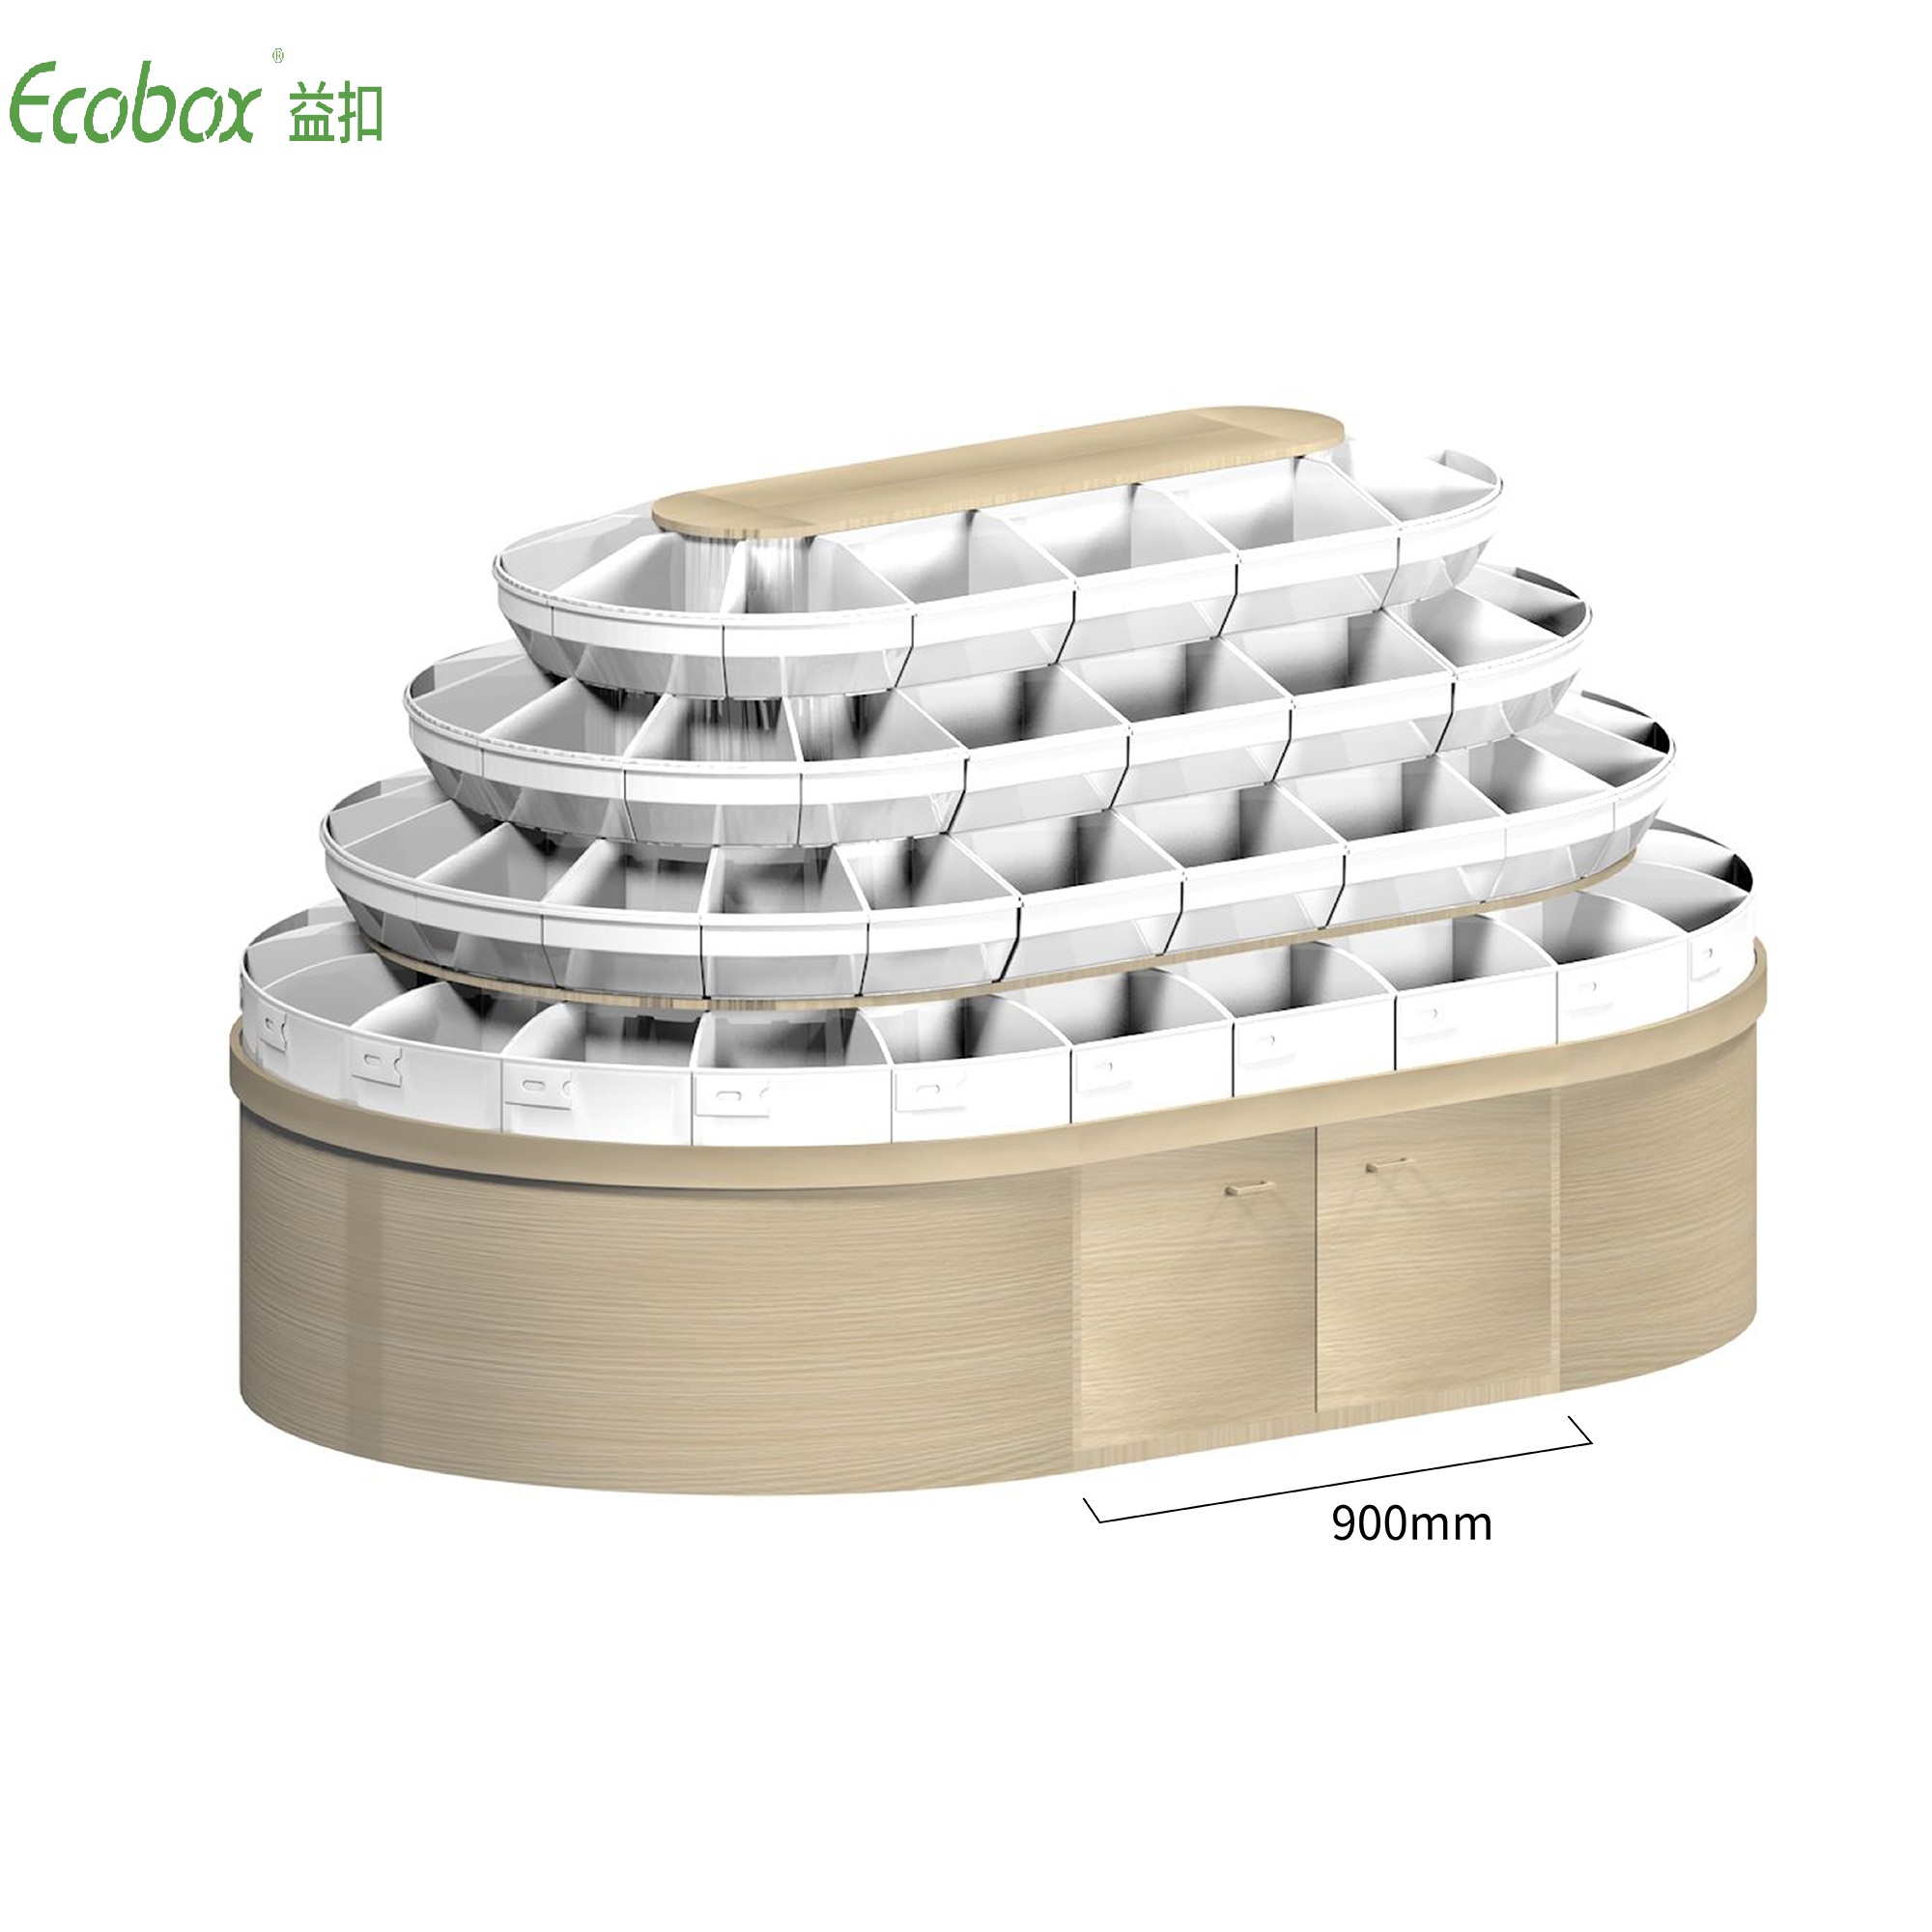 Ecobox G008 series round shelf with Ecobox bulk bins supermarket bulk food displays